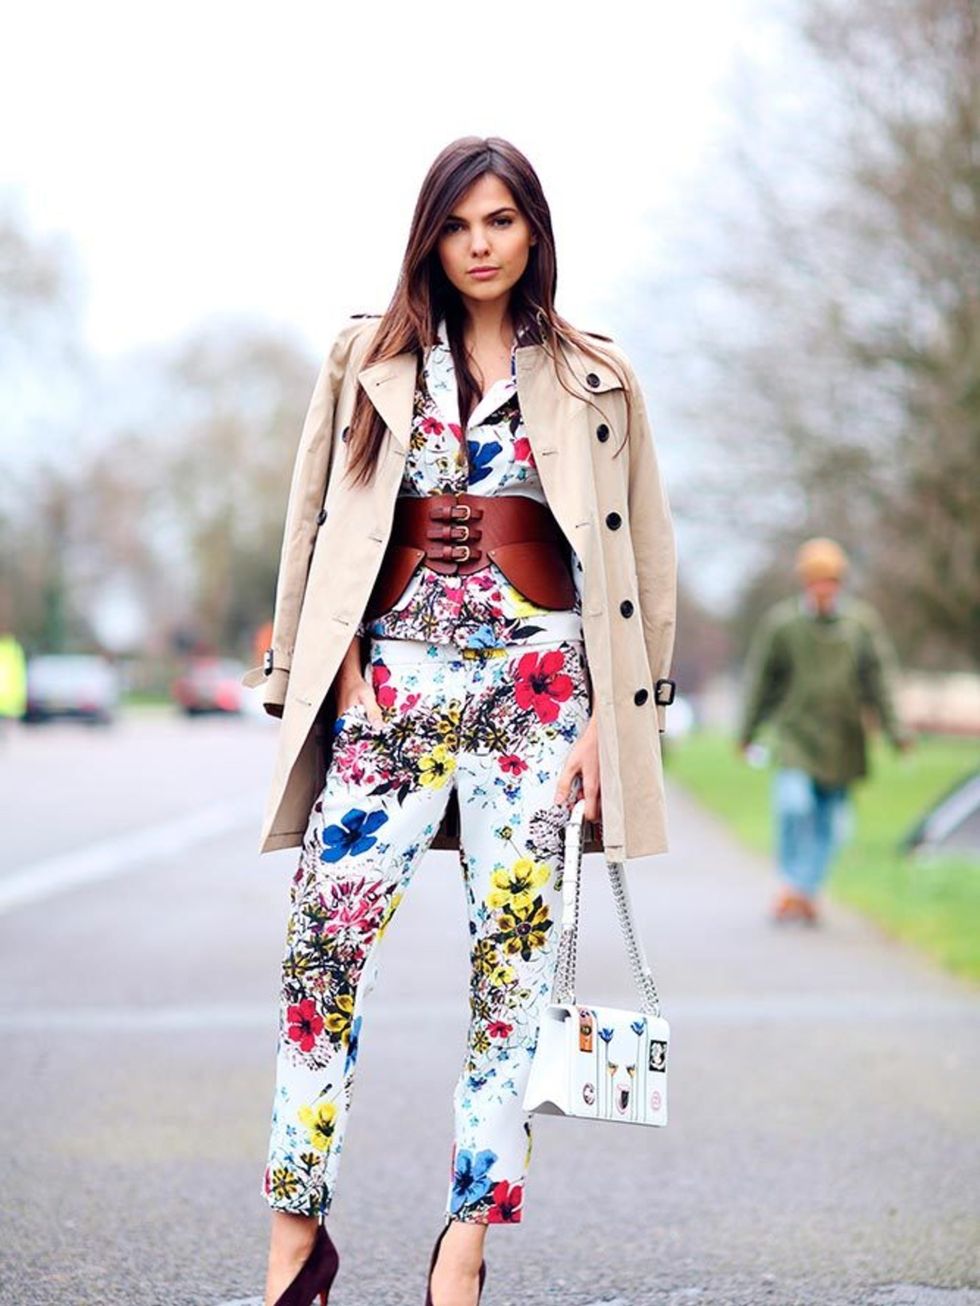 <p>Doina Ciobanu</p>

<p>Erdem suit, Burberry coat, Louboutin shoes, Fleet Ilya belt, Dior bag</p>